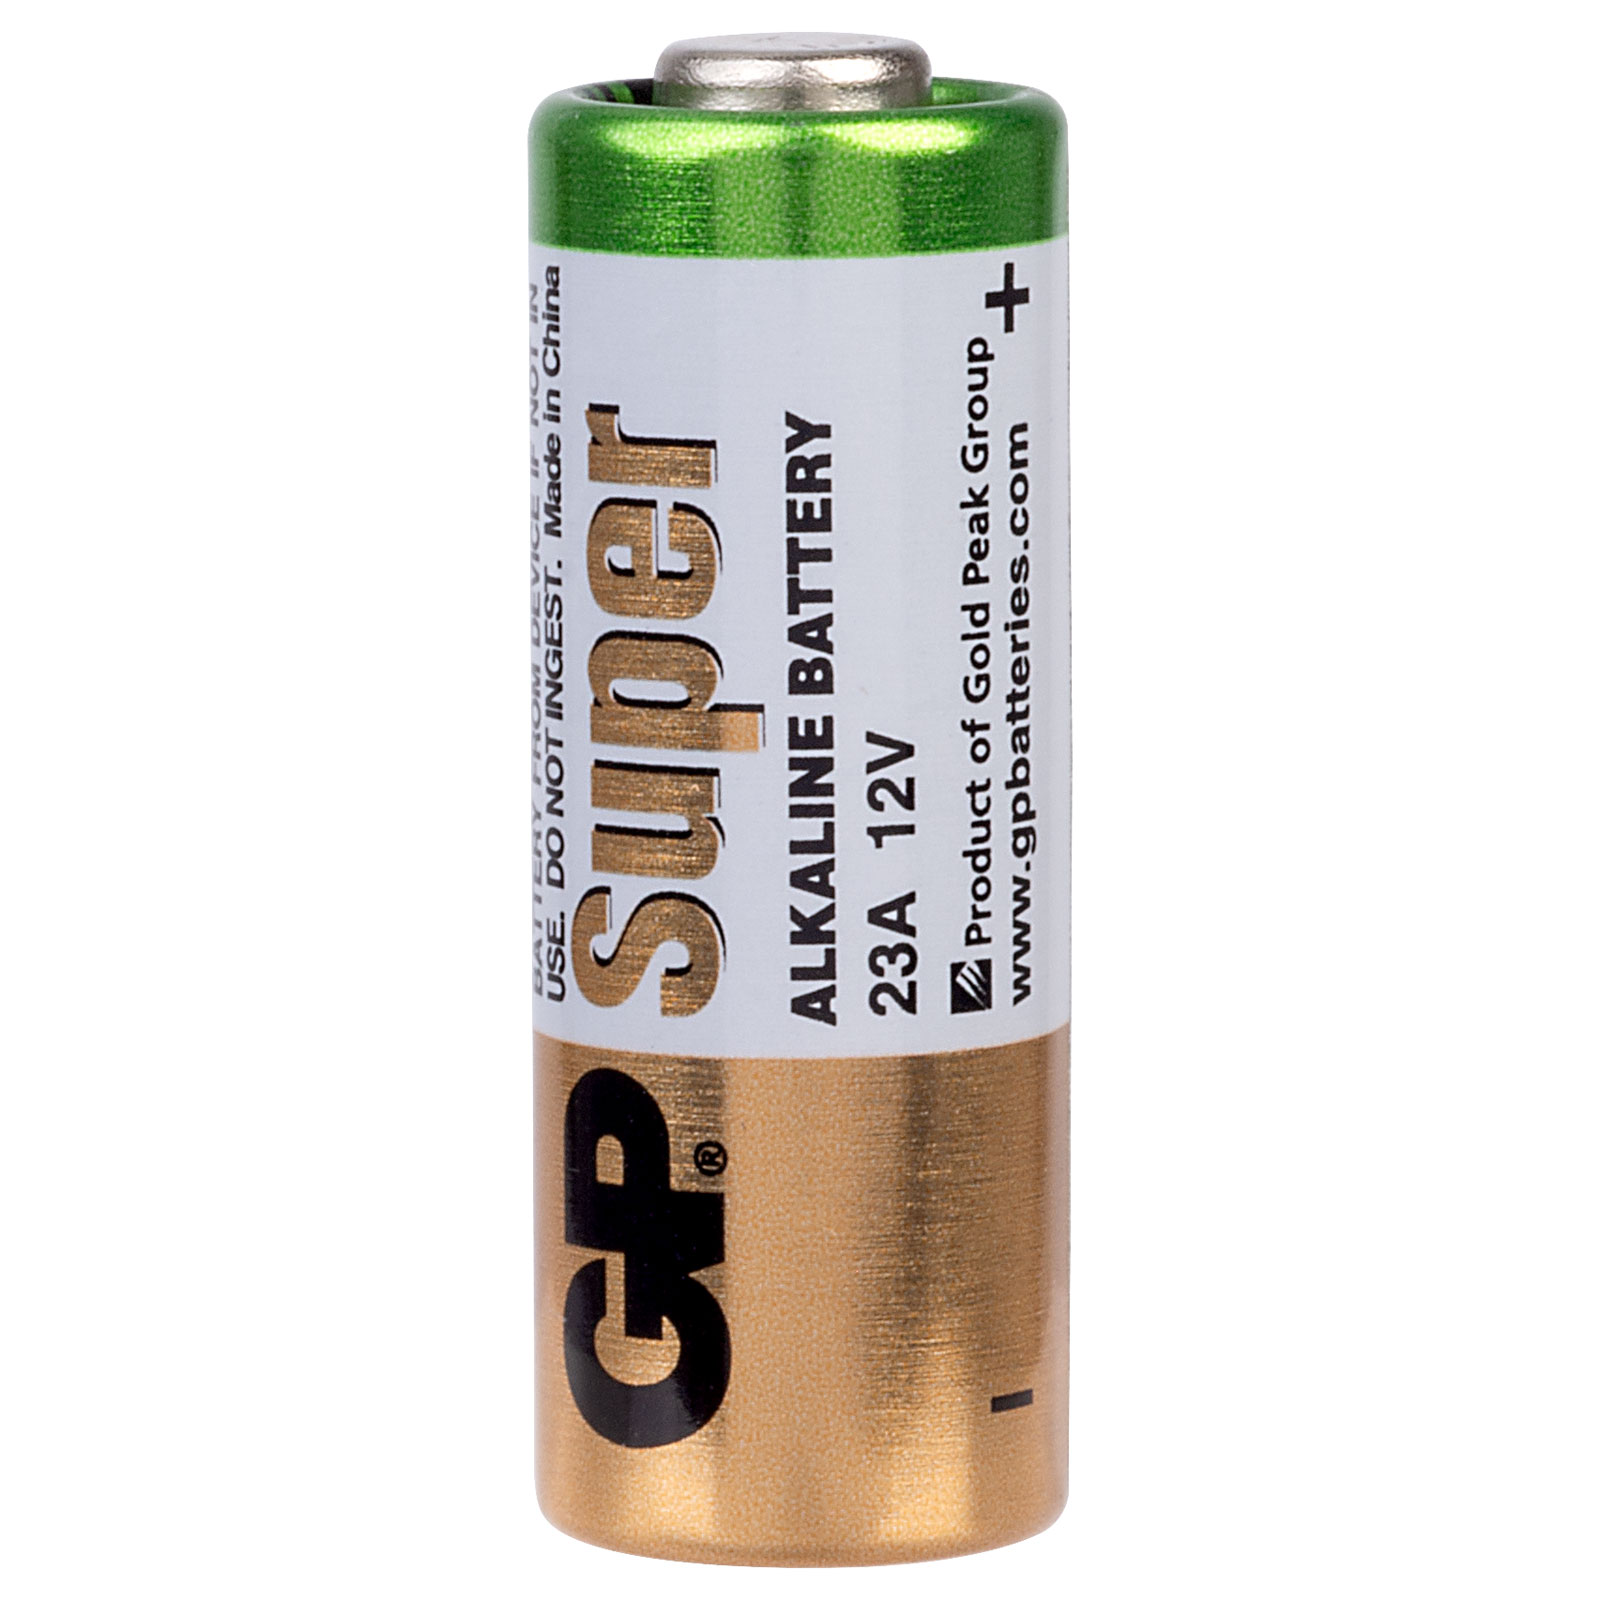 Элемент питания GP Ultra 23ae 12v. Батарейка 23ae 12v. GP Ultra Alkaline Battery 23ae 12v. Батарейка 23 ае 12v ультра алкалайн.